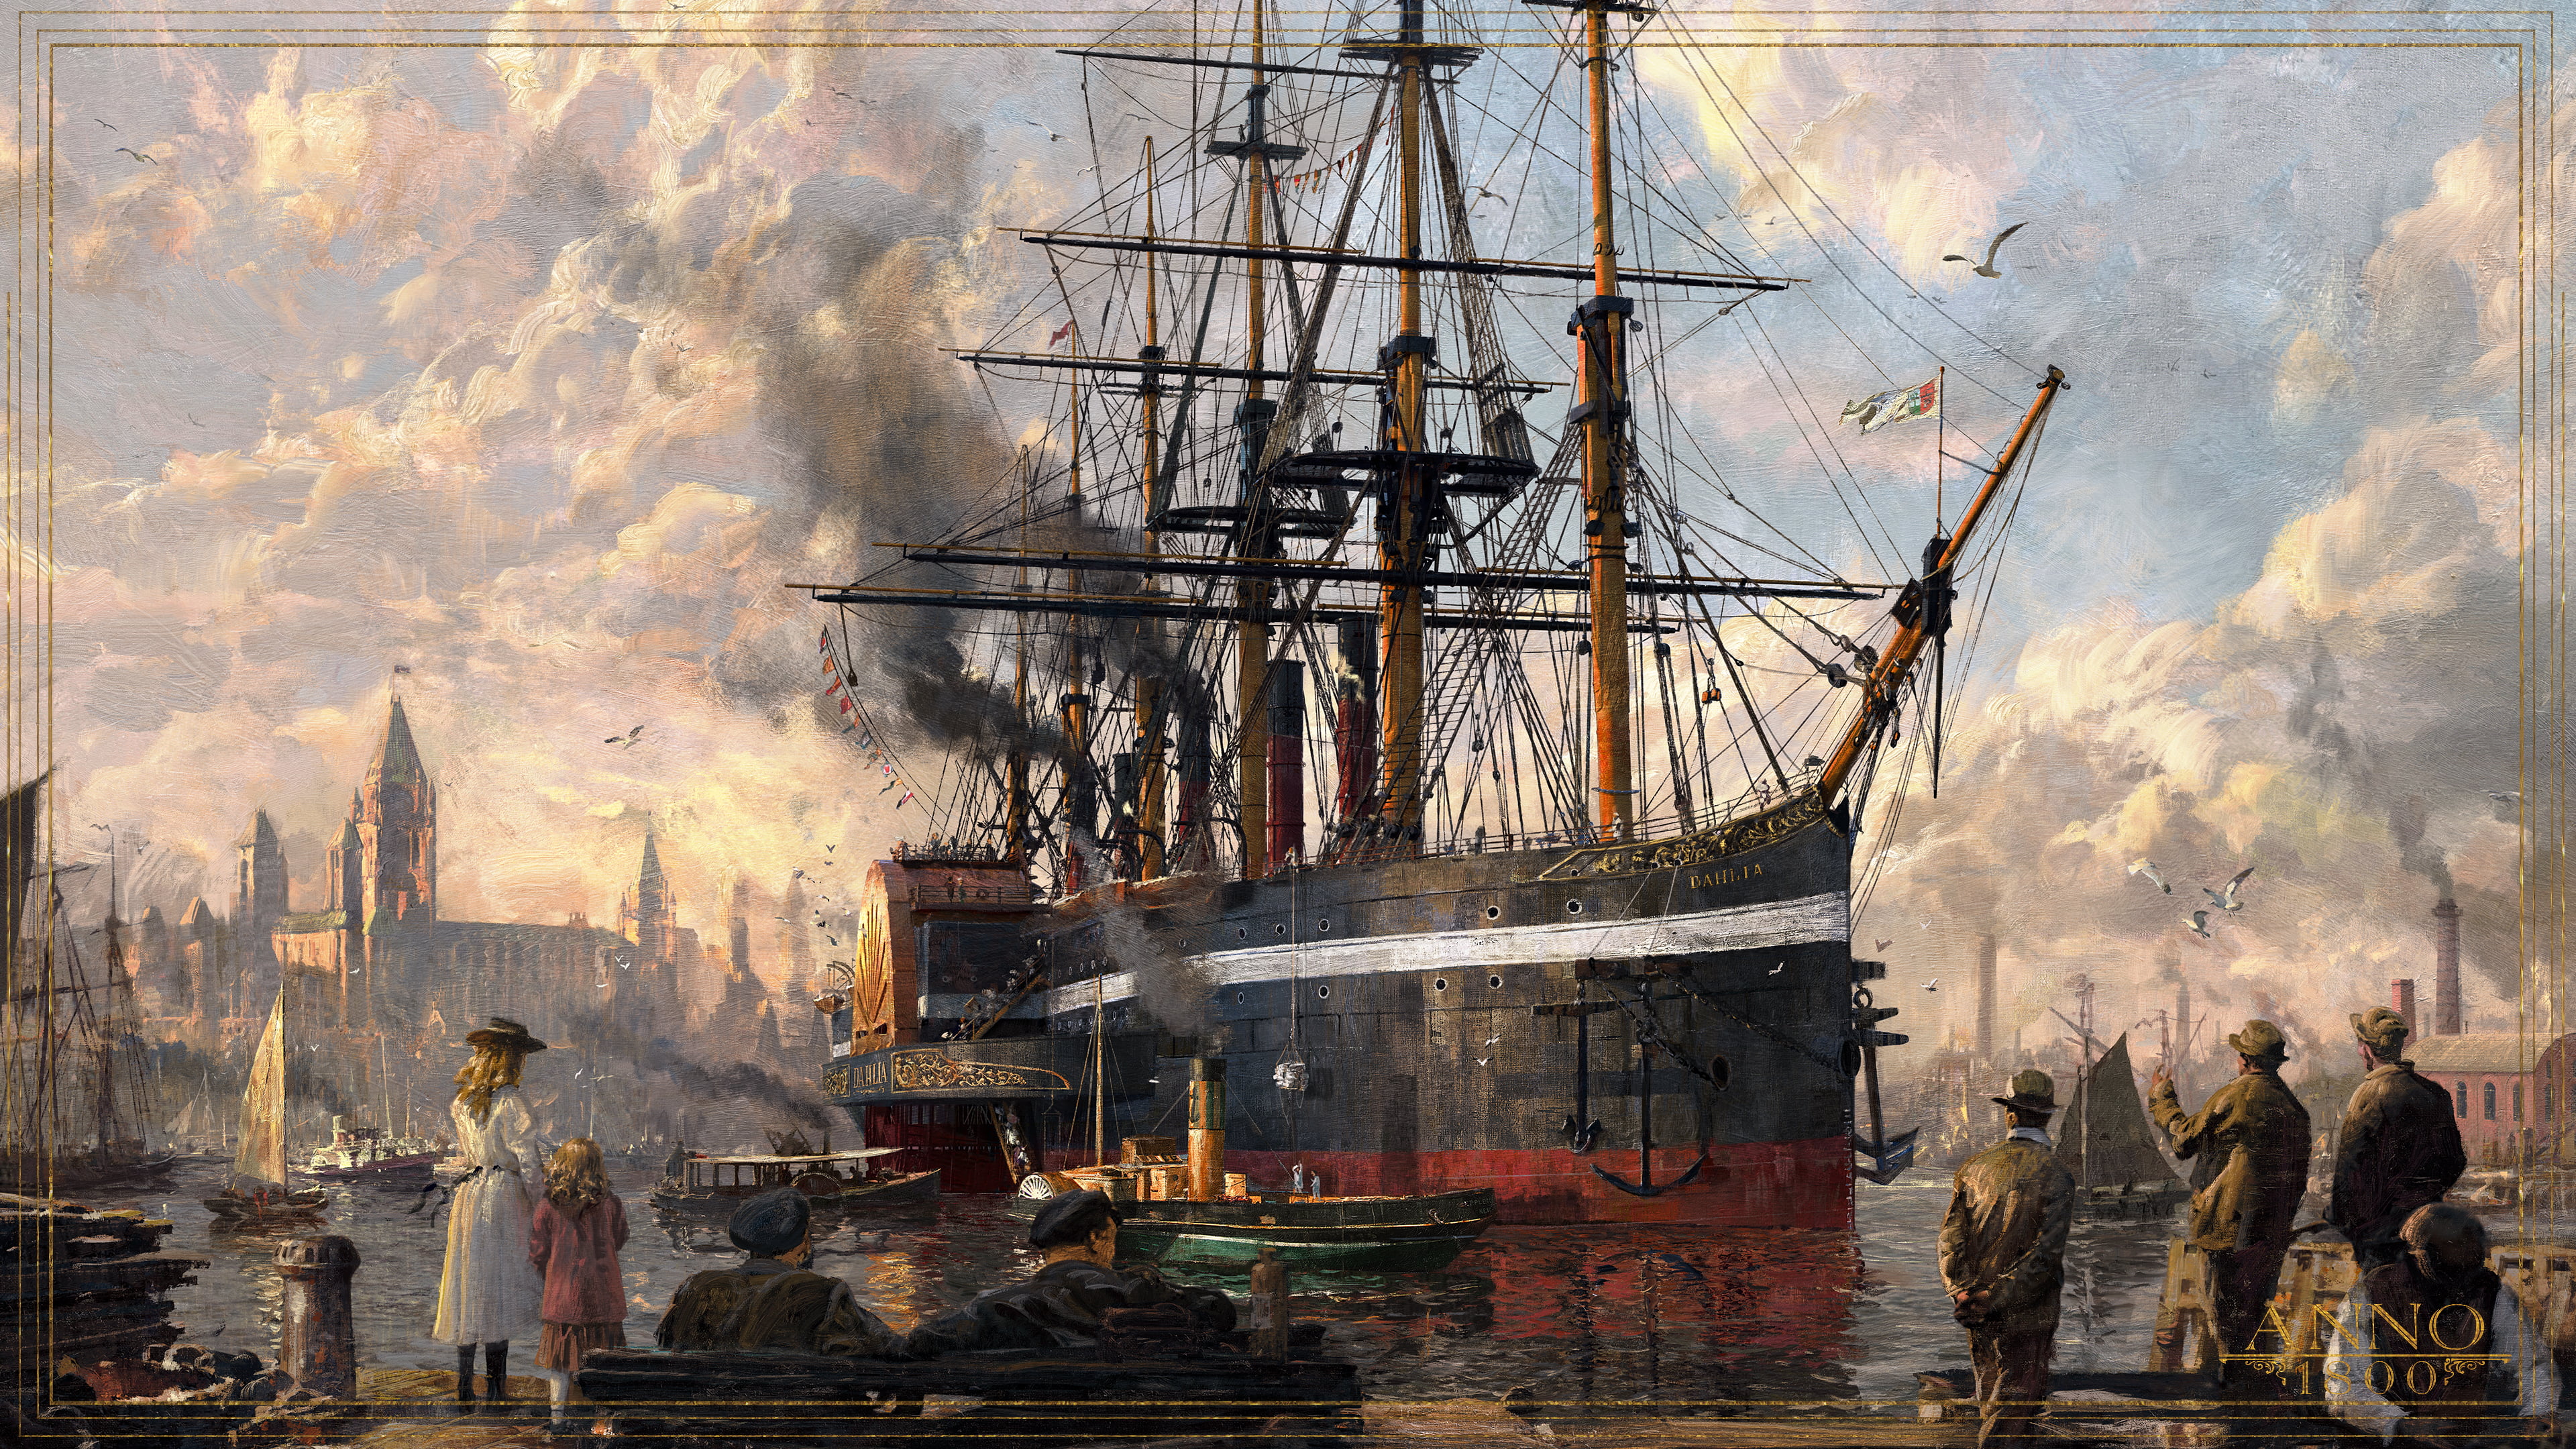 Anno 1800, 1800s, digital art, concept art, ship, harbor, steam ship